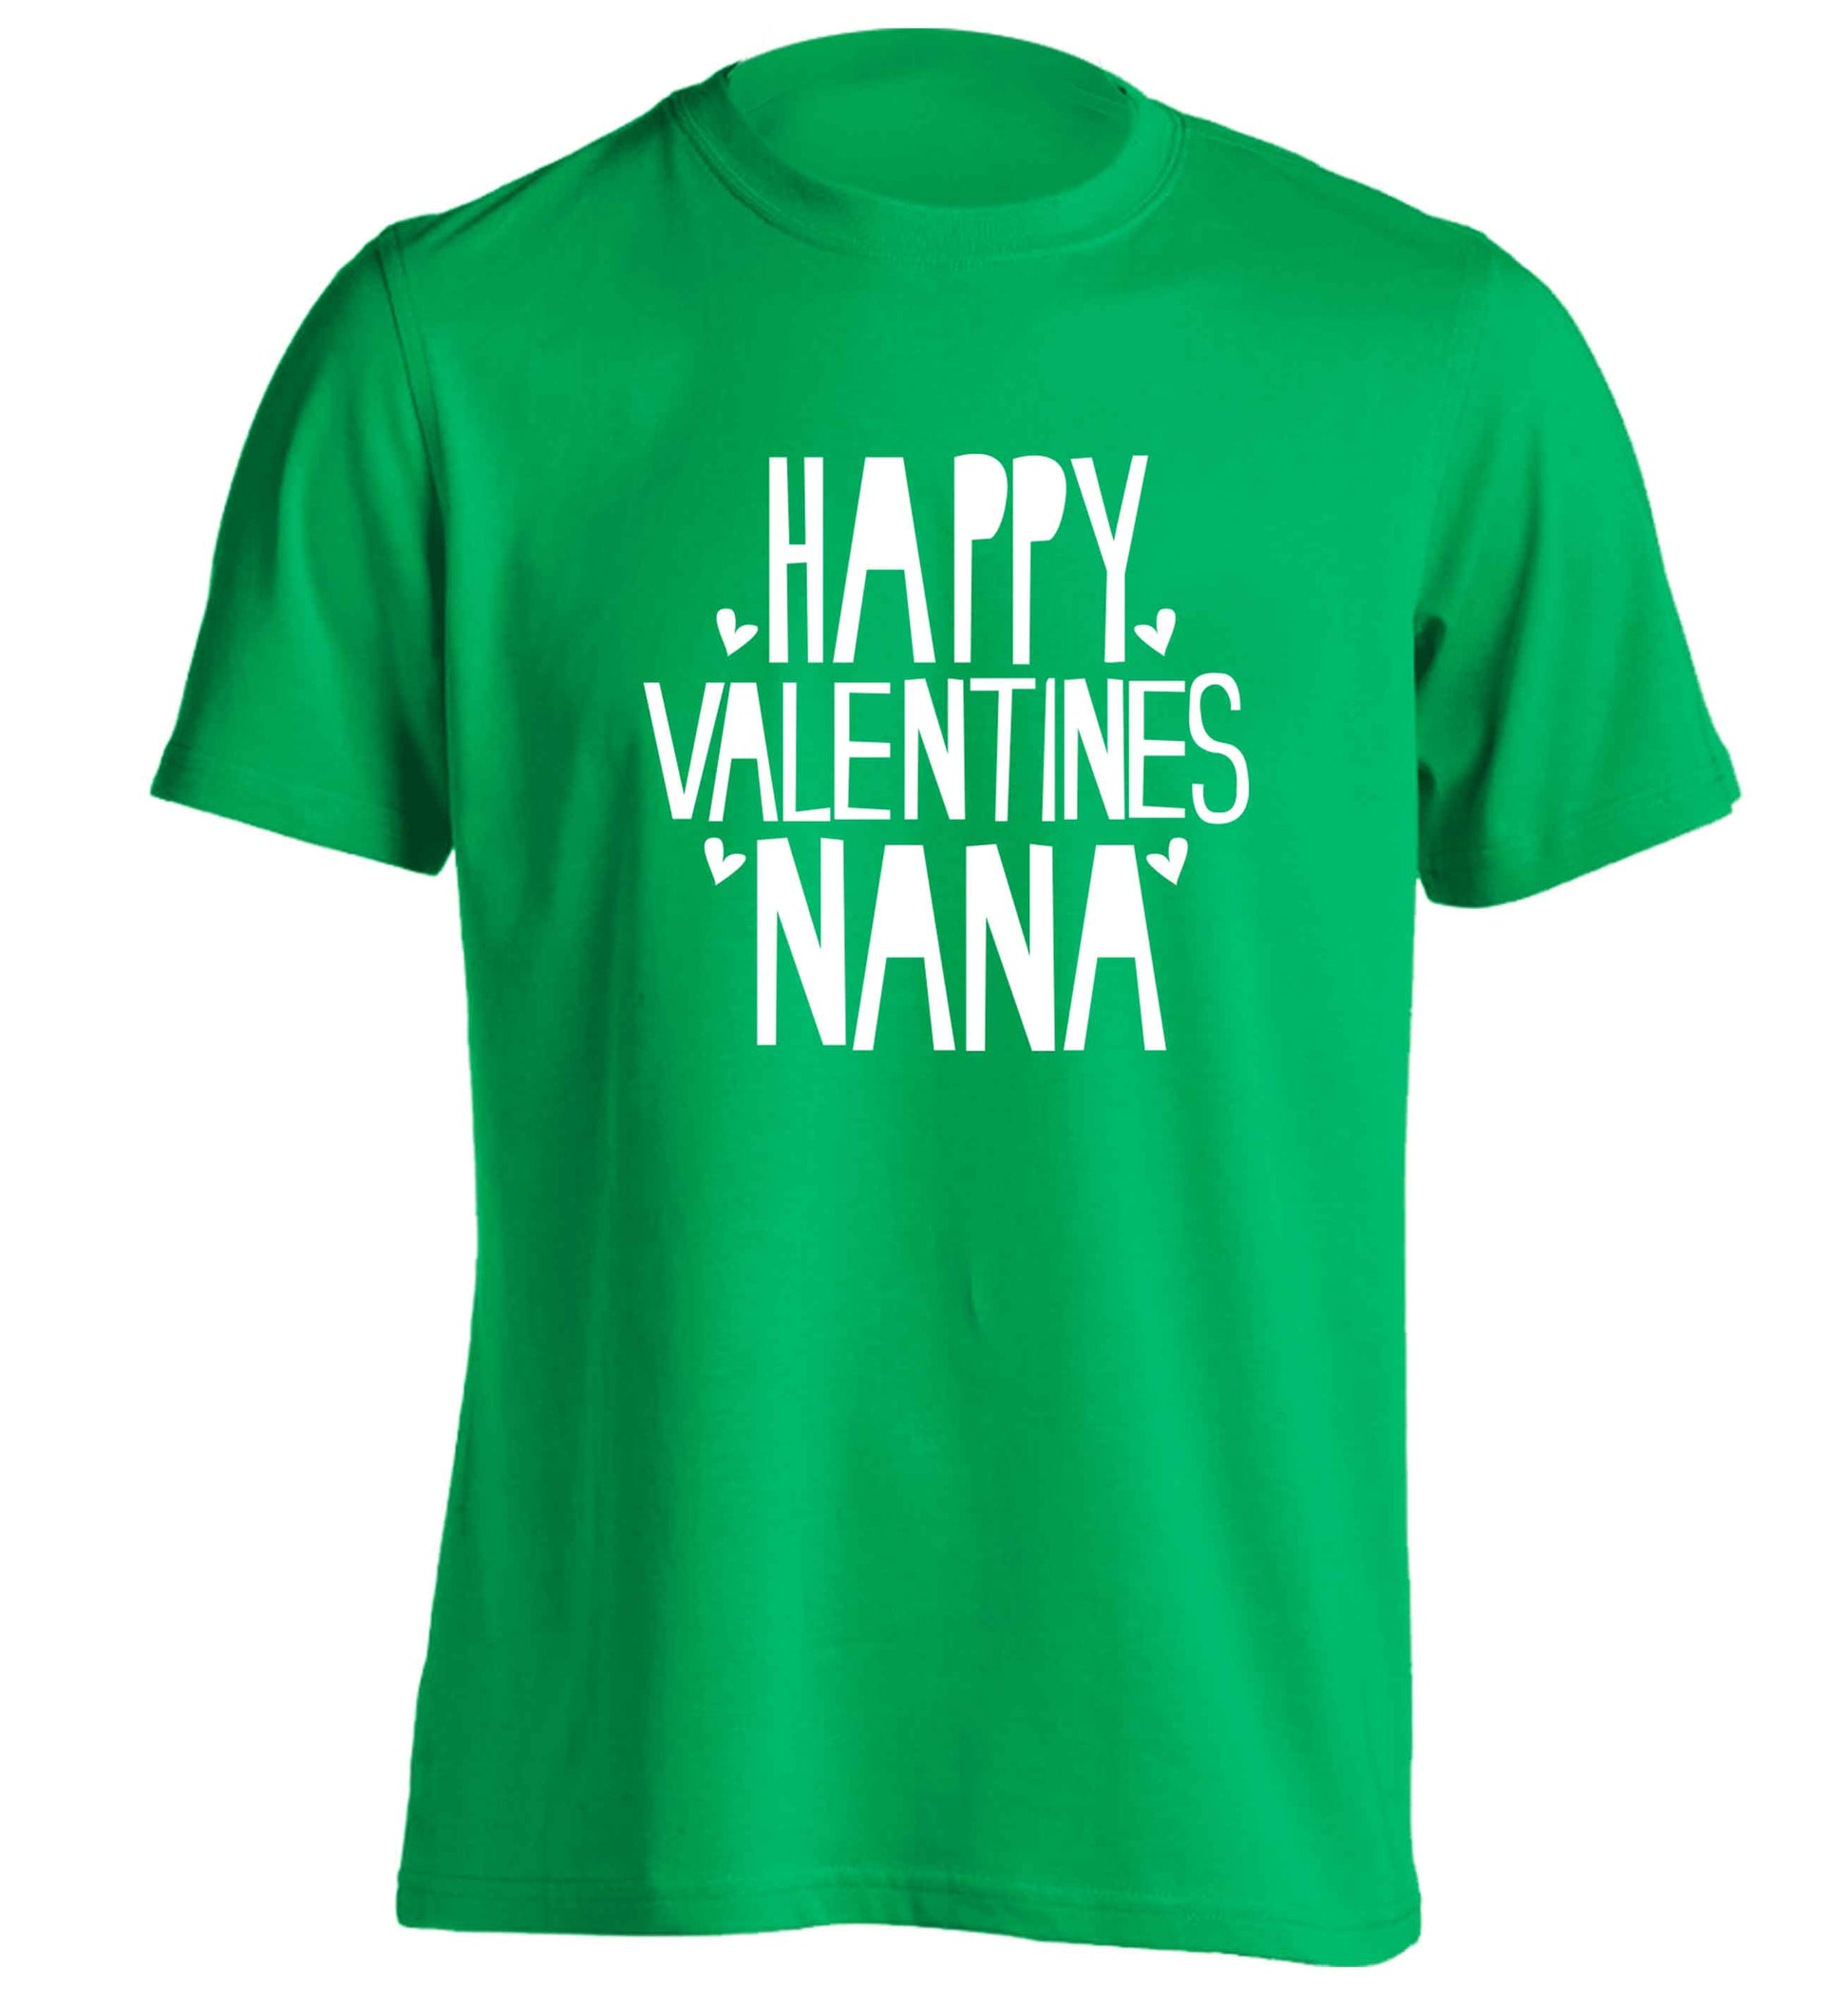 Happy valentines nana adults unisex green Tshirt 2XL